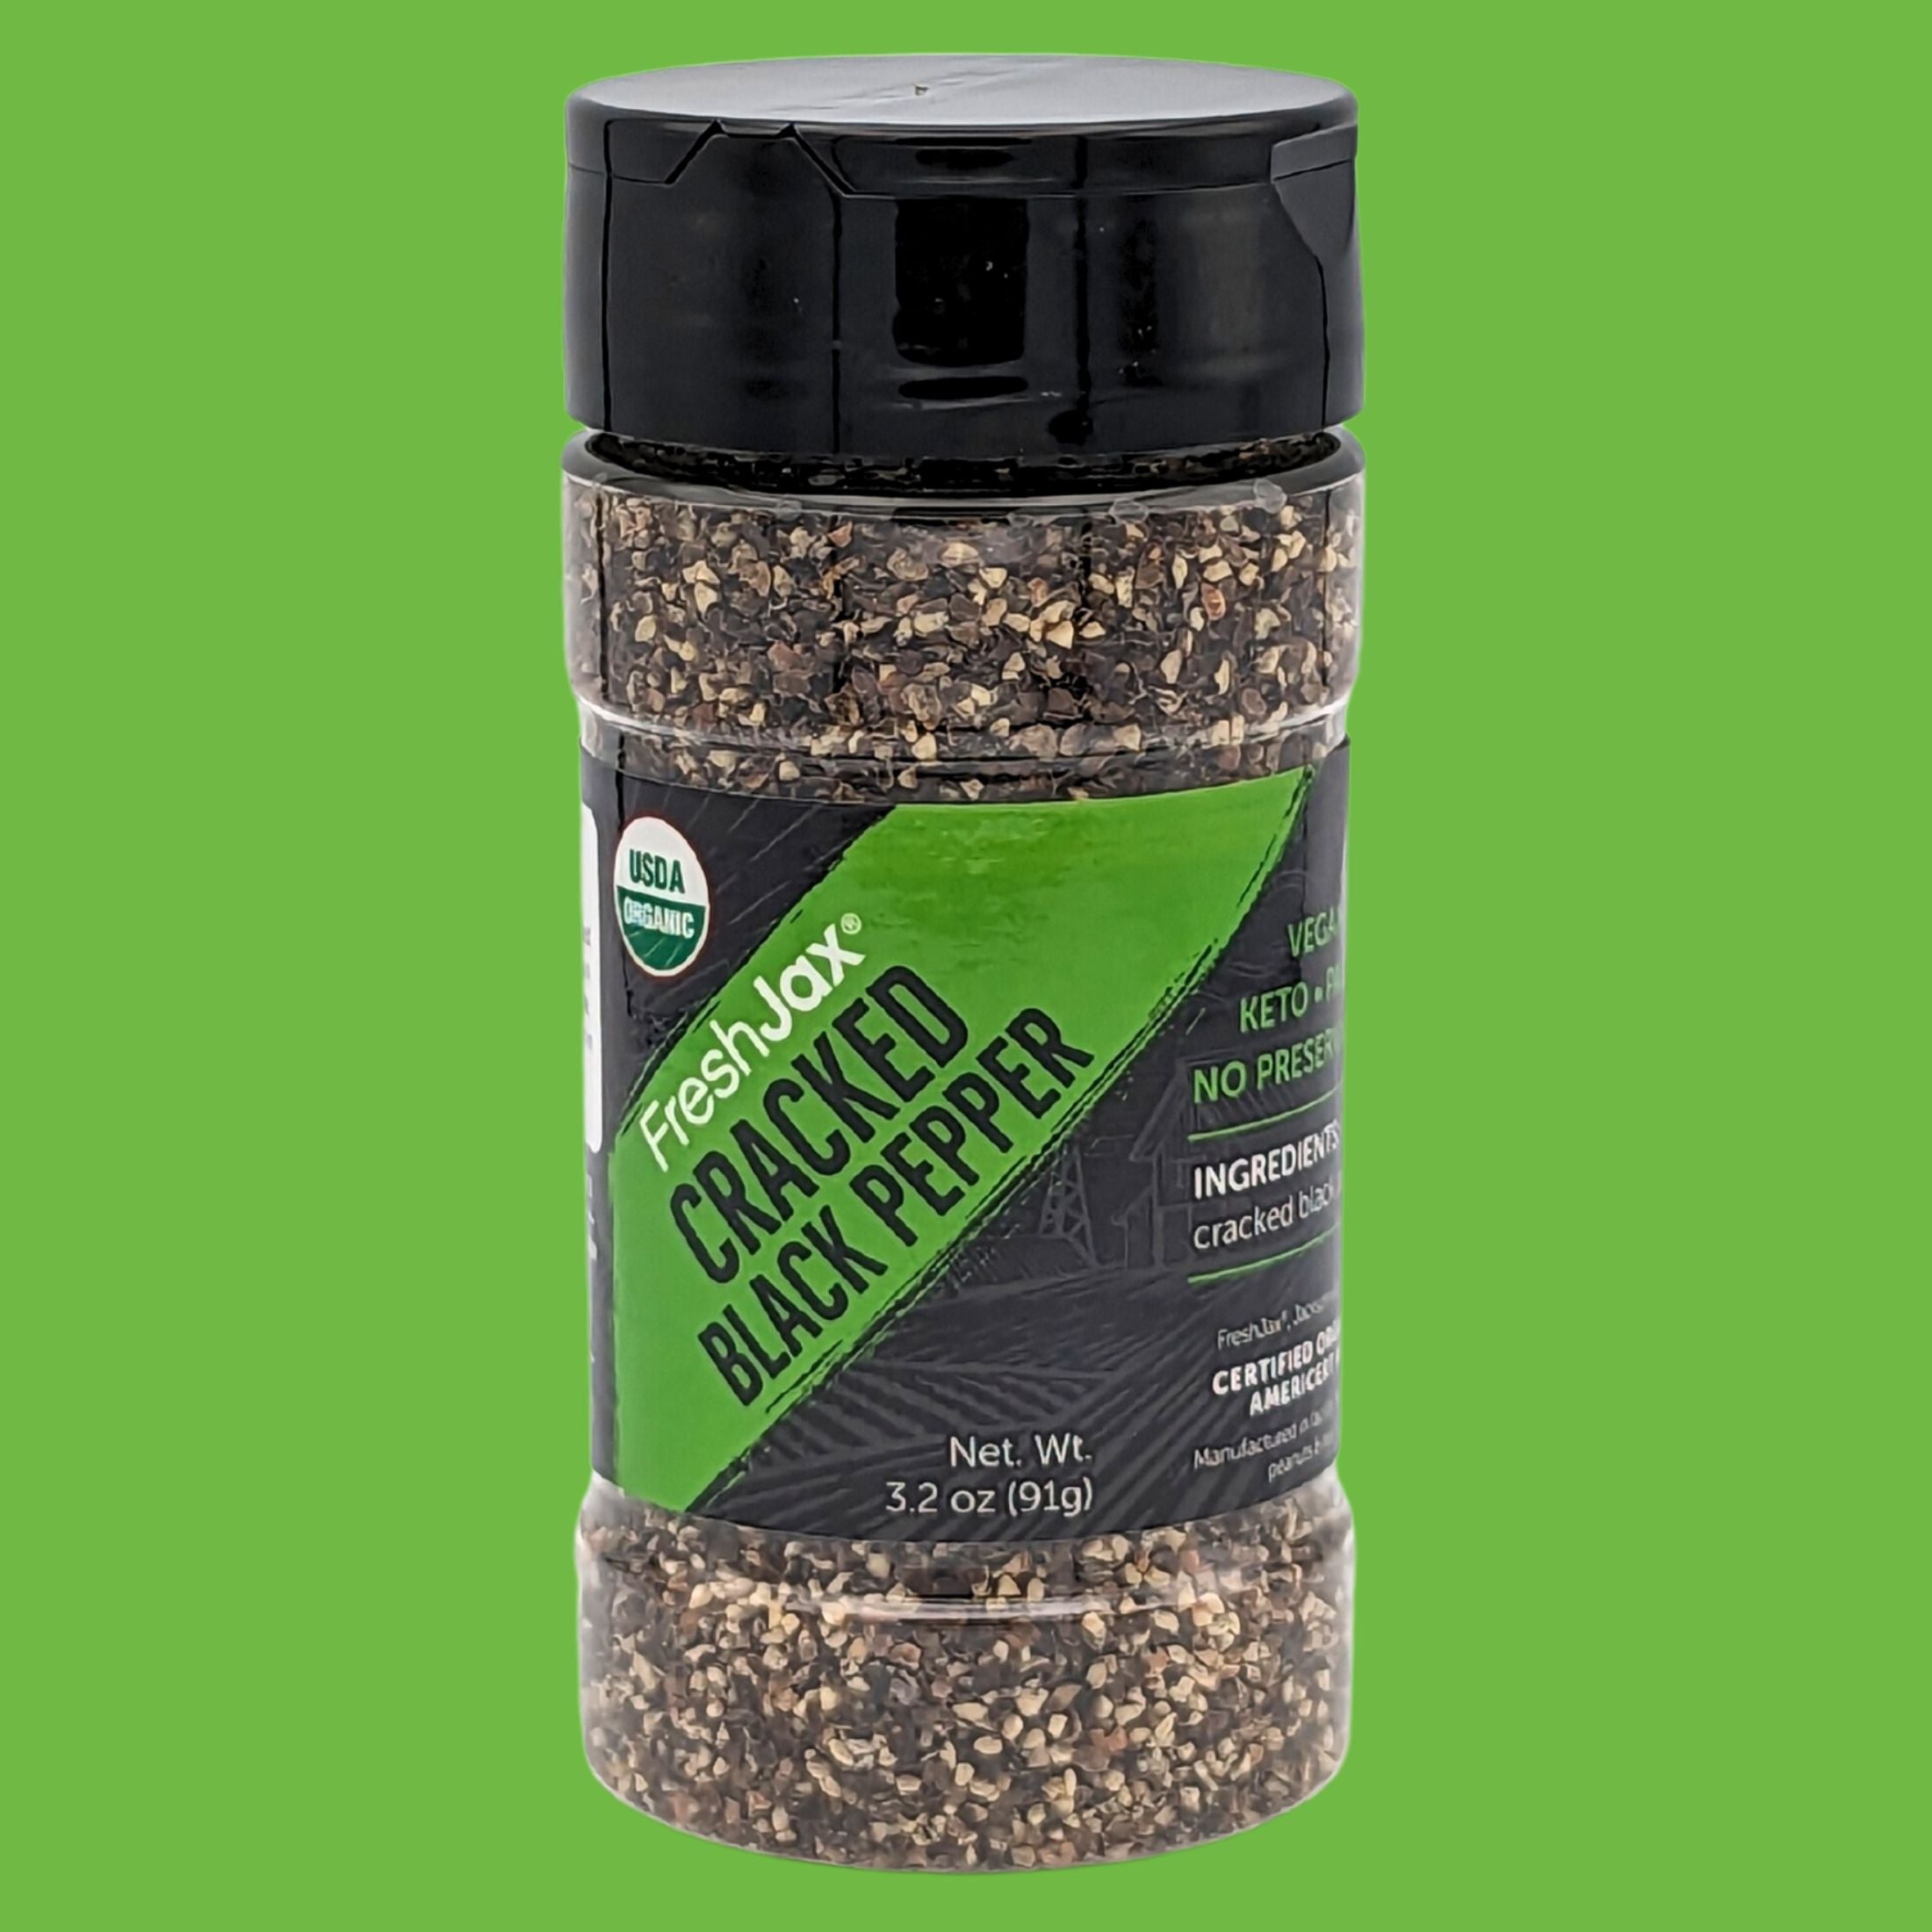 Freshjax Organic Spices (Certified Organic Cracked Black Pepper - Large bottle)